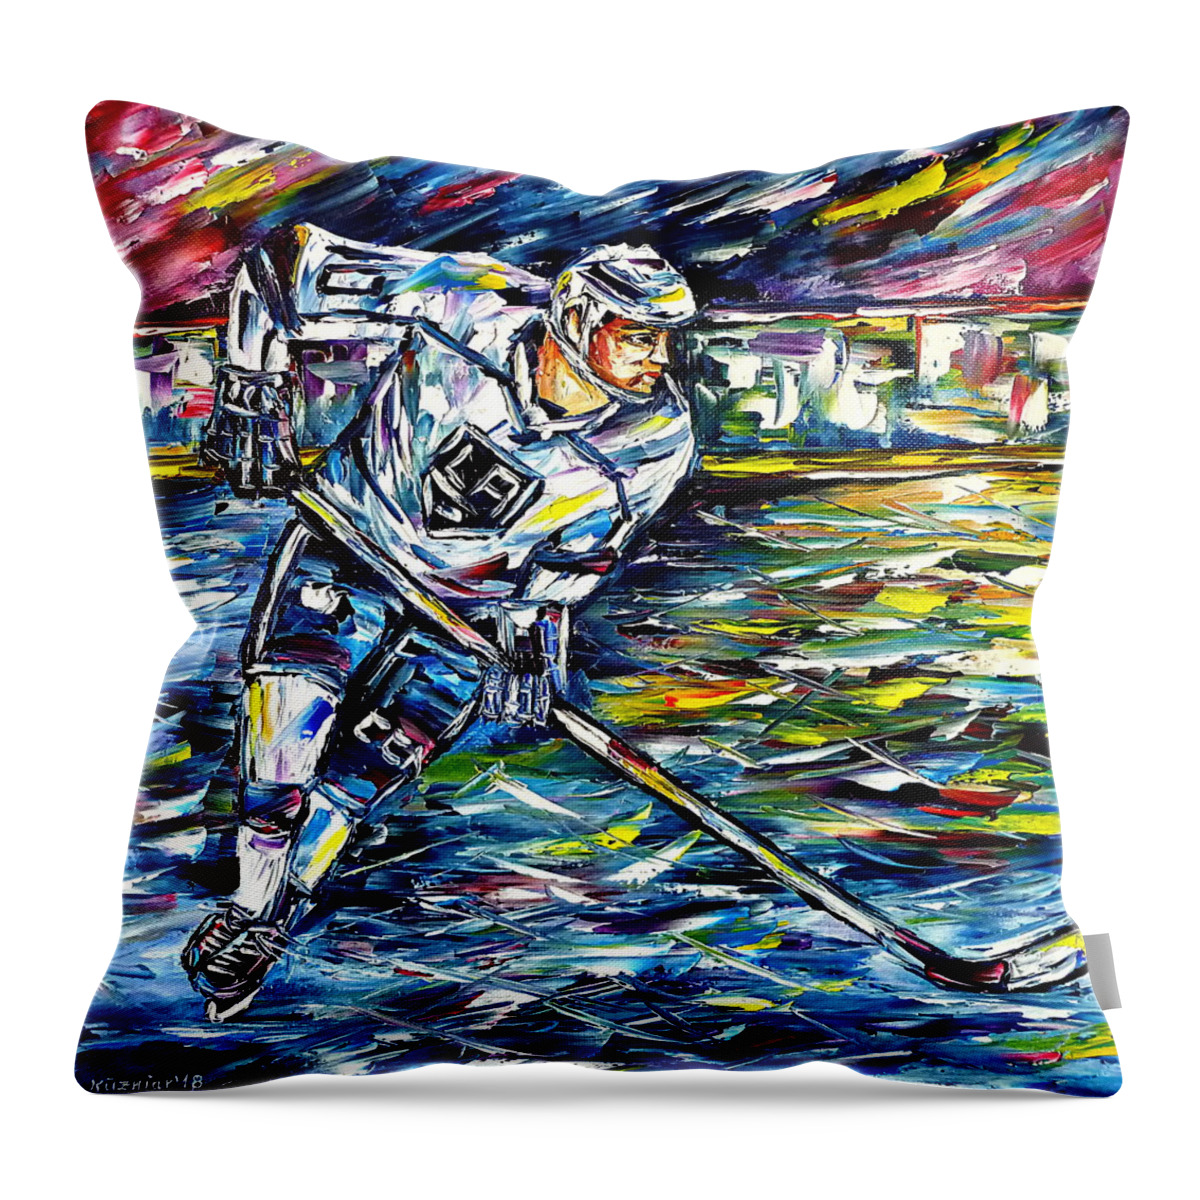 I Love Los Angeles Kings Throw Pillow featuring the painting Ice Hockey Player by Mirek Kuzniar